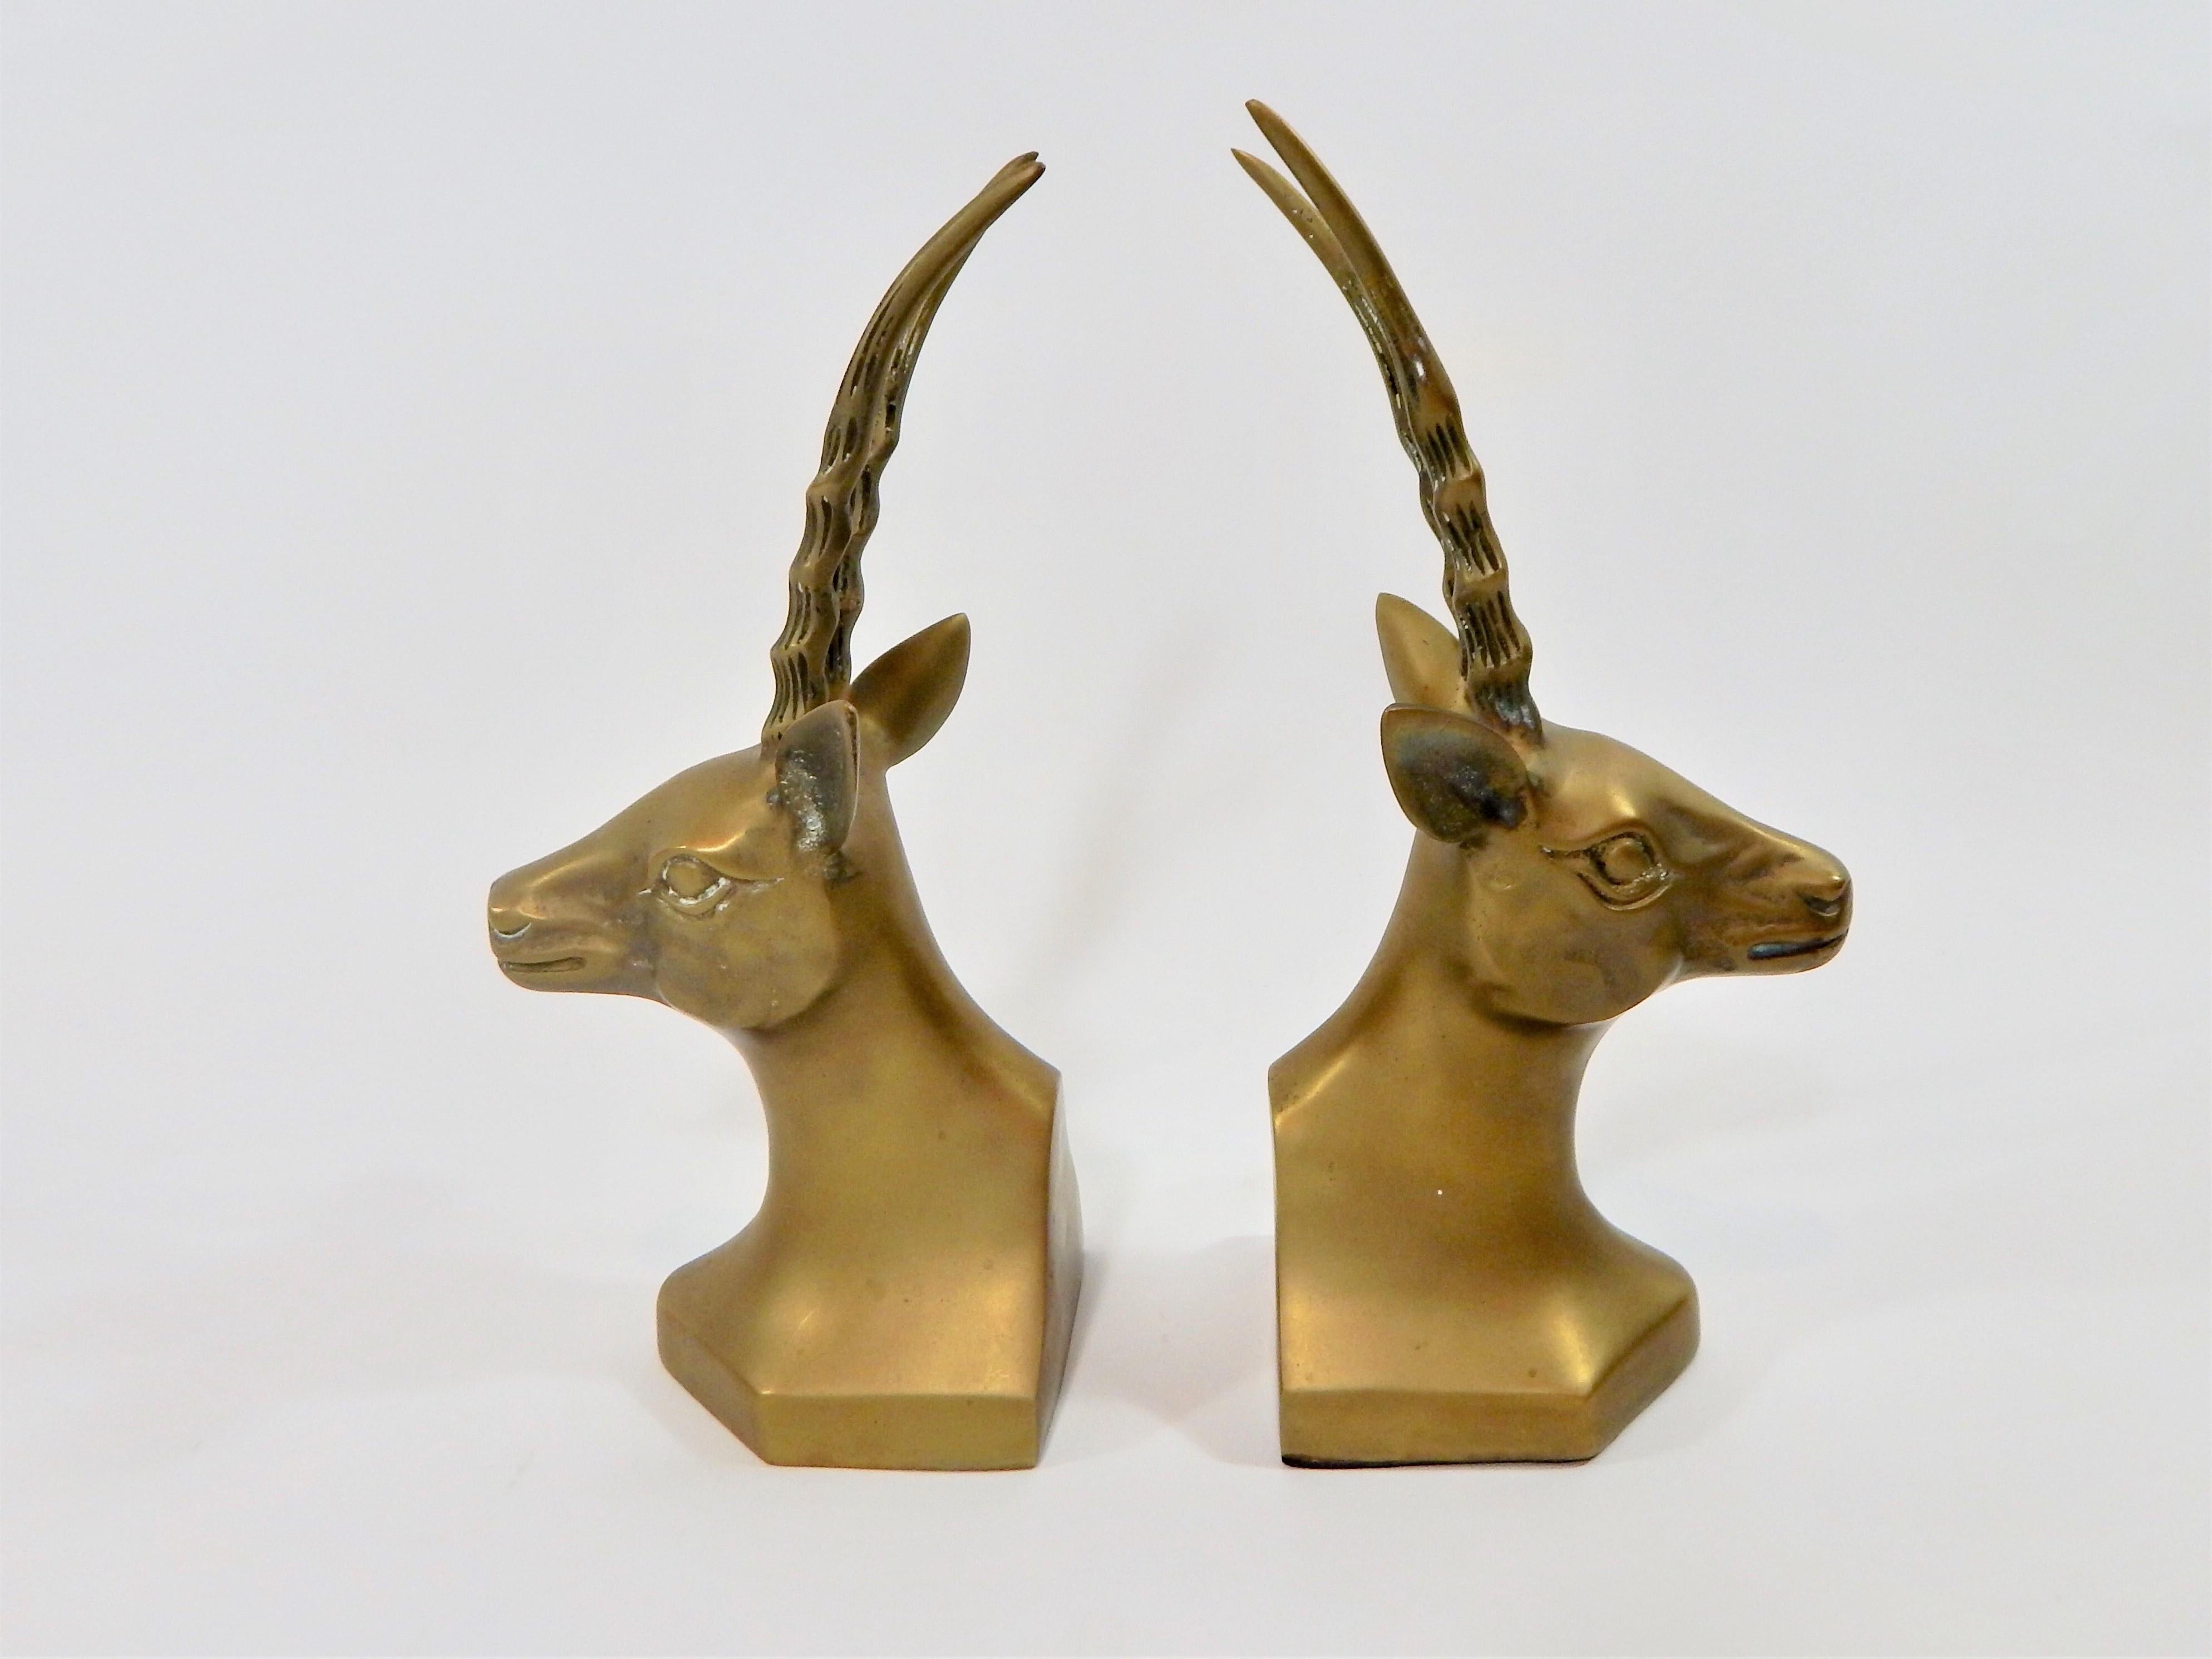 1970s solid brass antelope or gazelle bookends. Nice patina on brass. Felt on bottom.
 